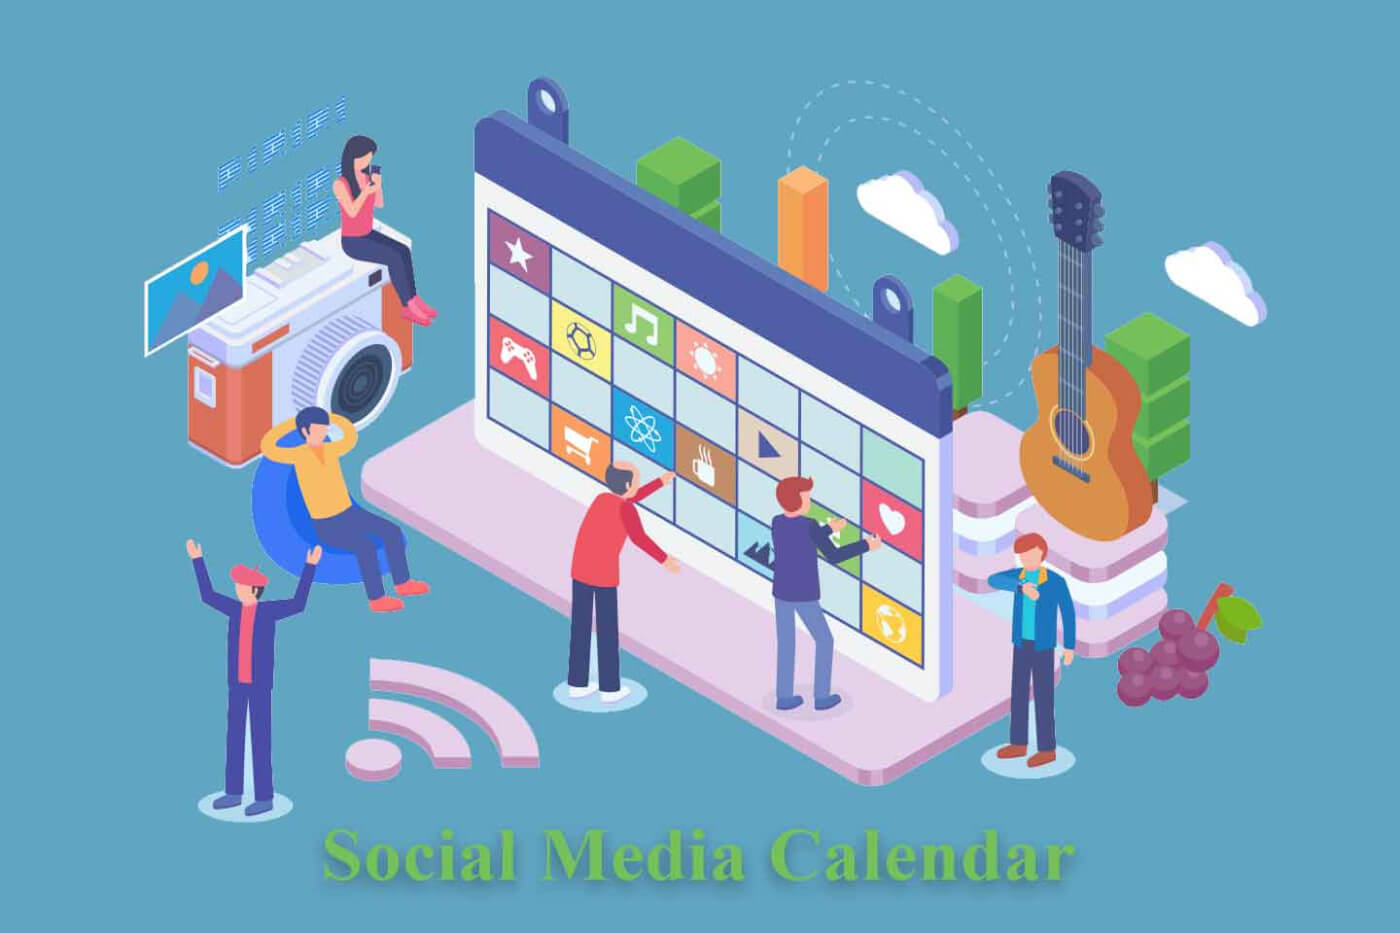 Benefits Of Using A Social Calendar?